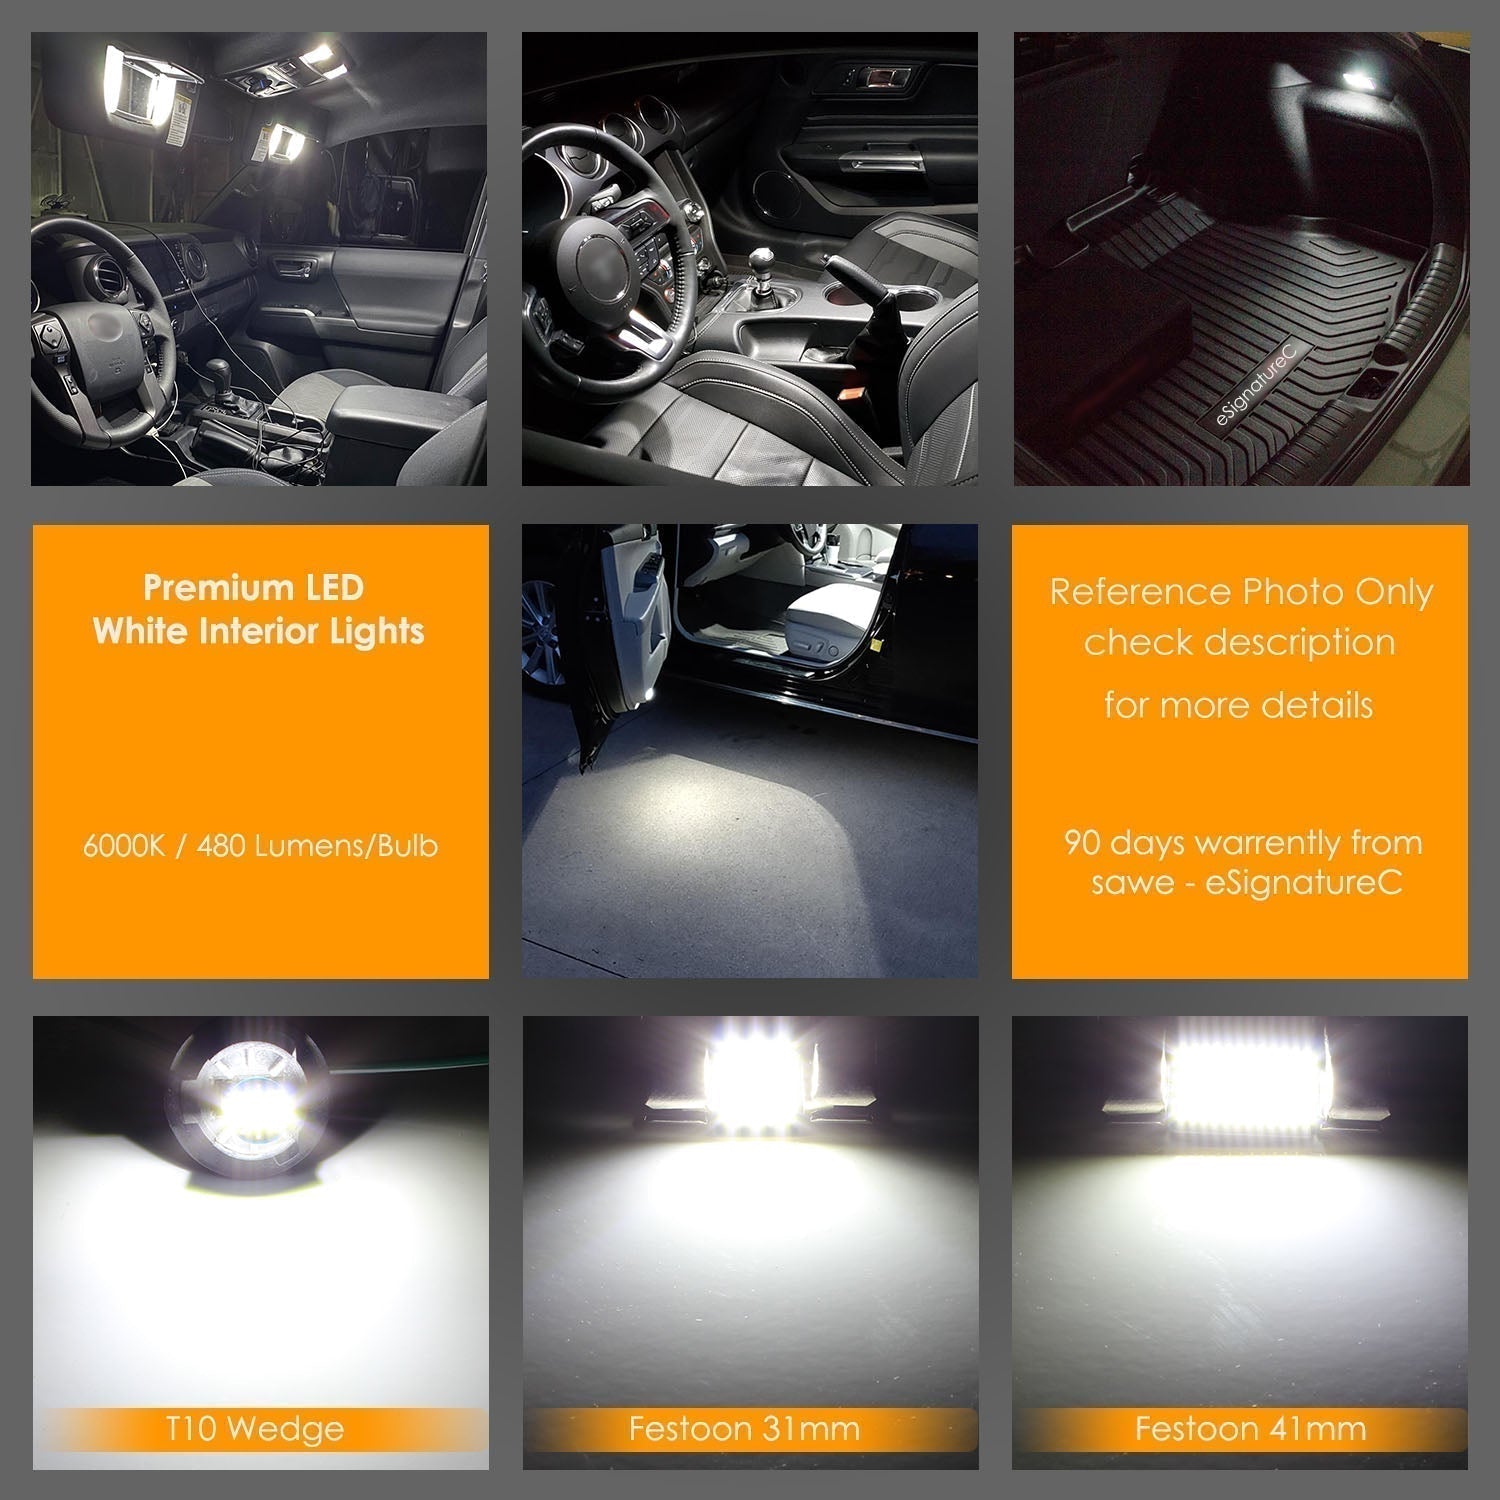 For Mazda 5 Interior LED Lights - Dome & Map Light Bulbs Package Kit for 2006 - 2017 - White